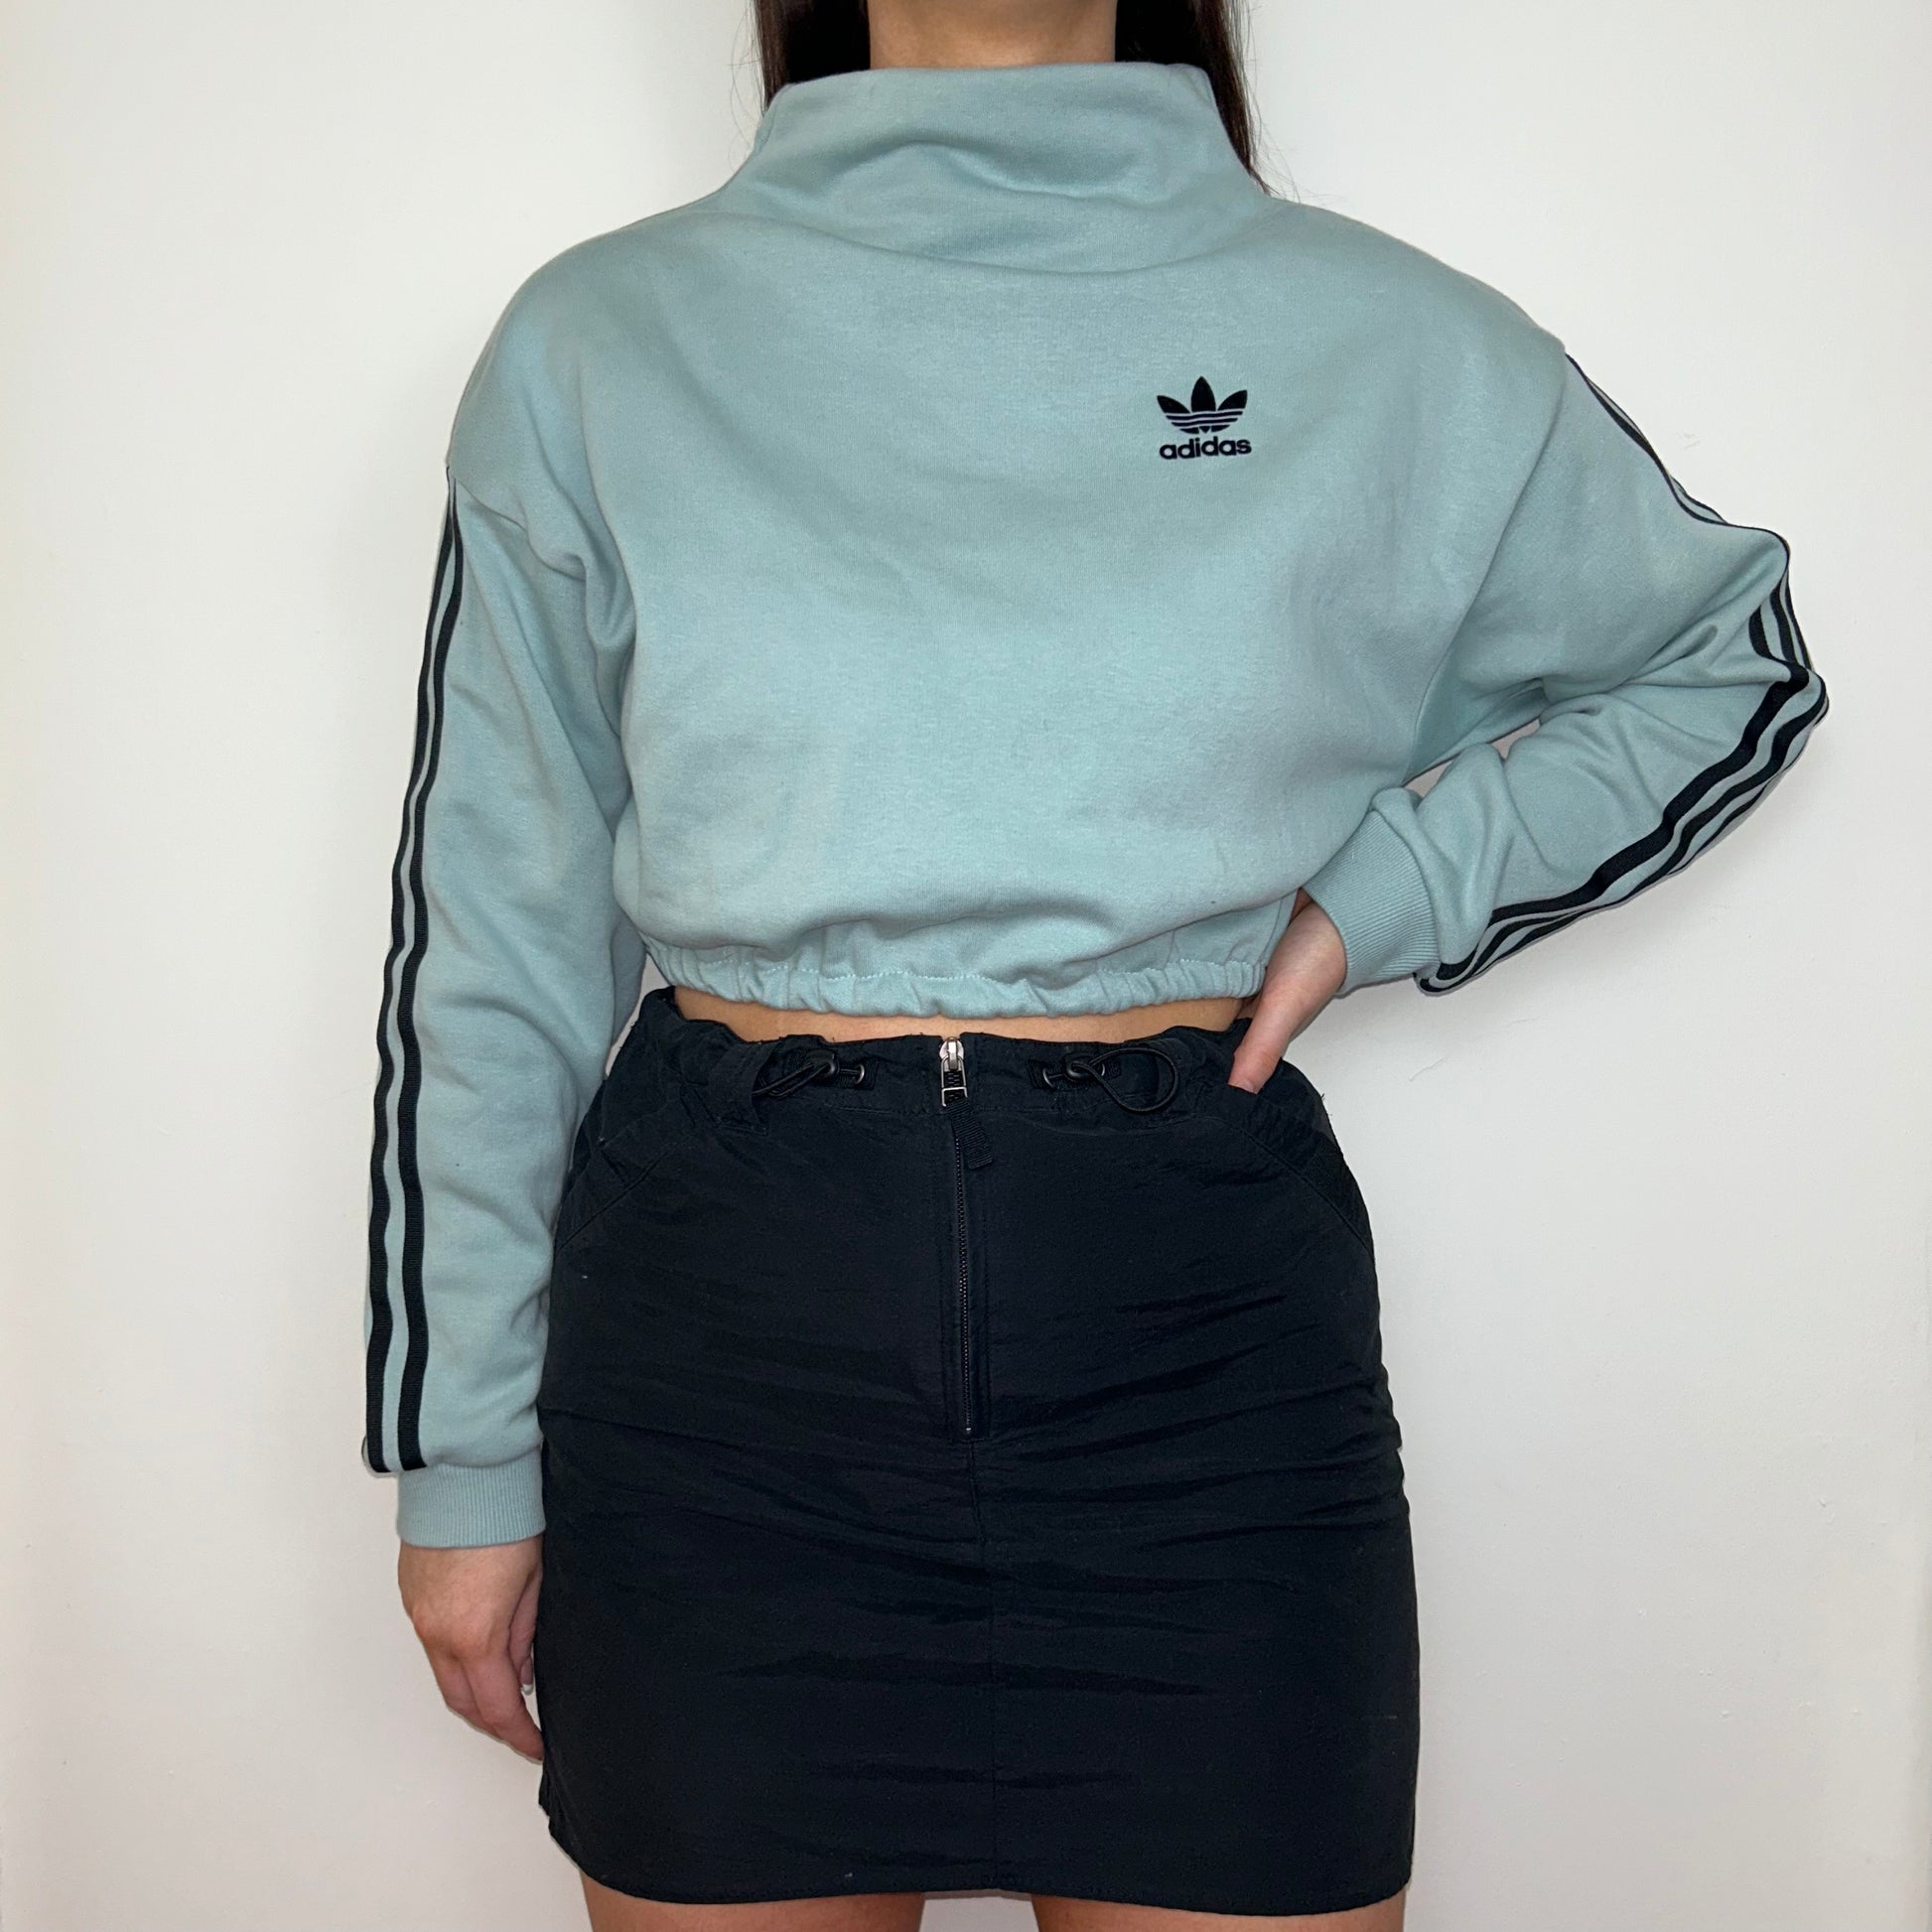 light blue cropped sweatshirt with black adidas logo shown on a model wearing a black mini skirt